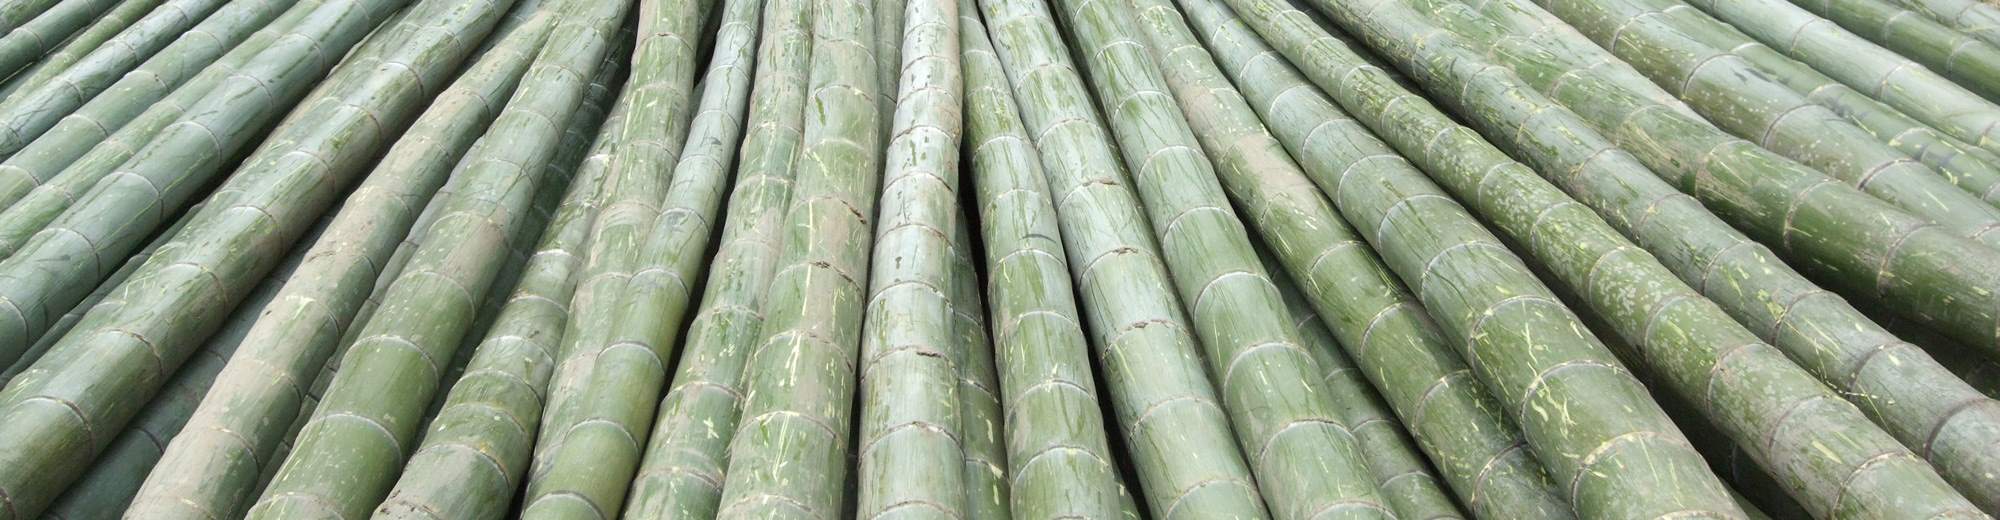 Bambus stammer - et bæredygtigt valg til bambusgulv